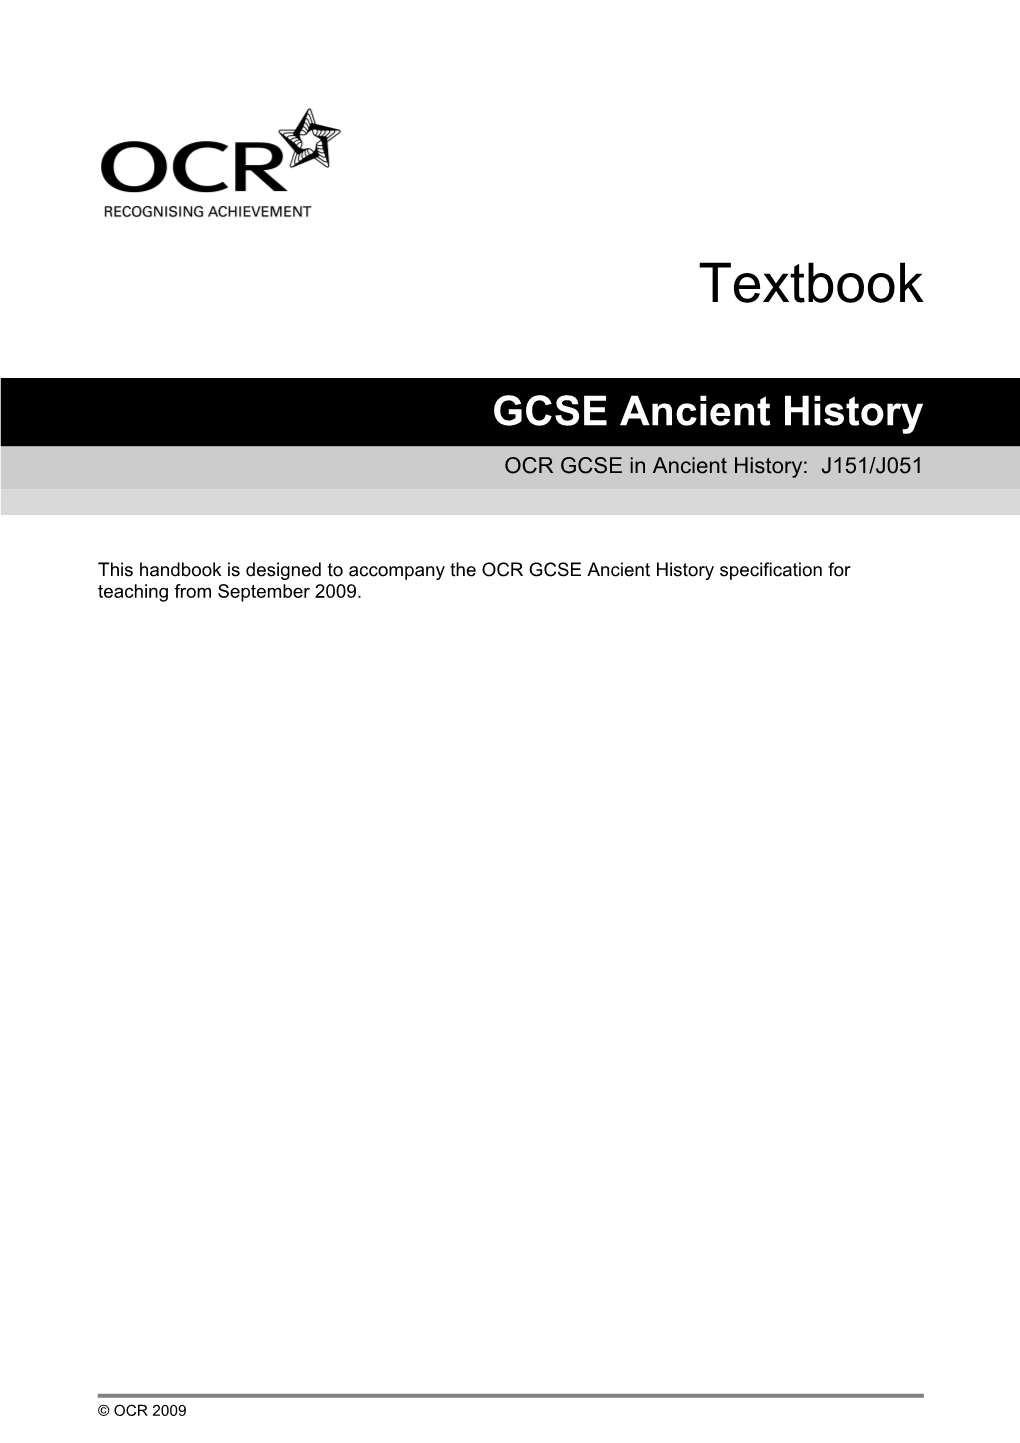 GCSE Ancient History